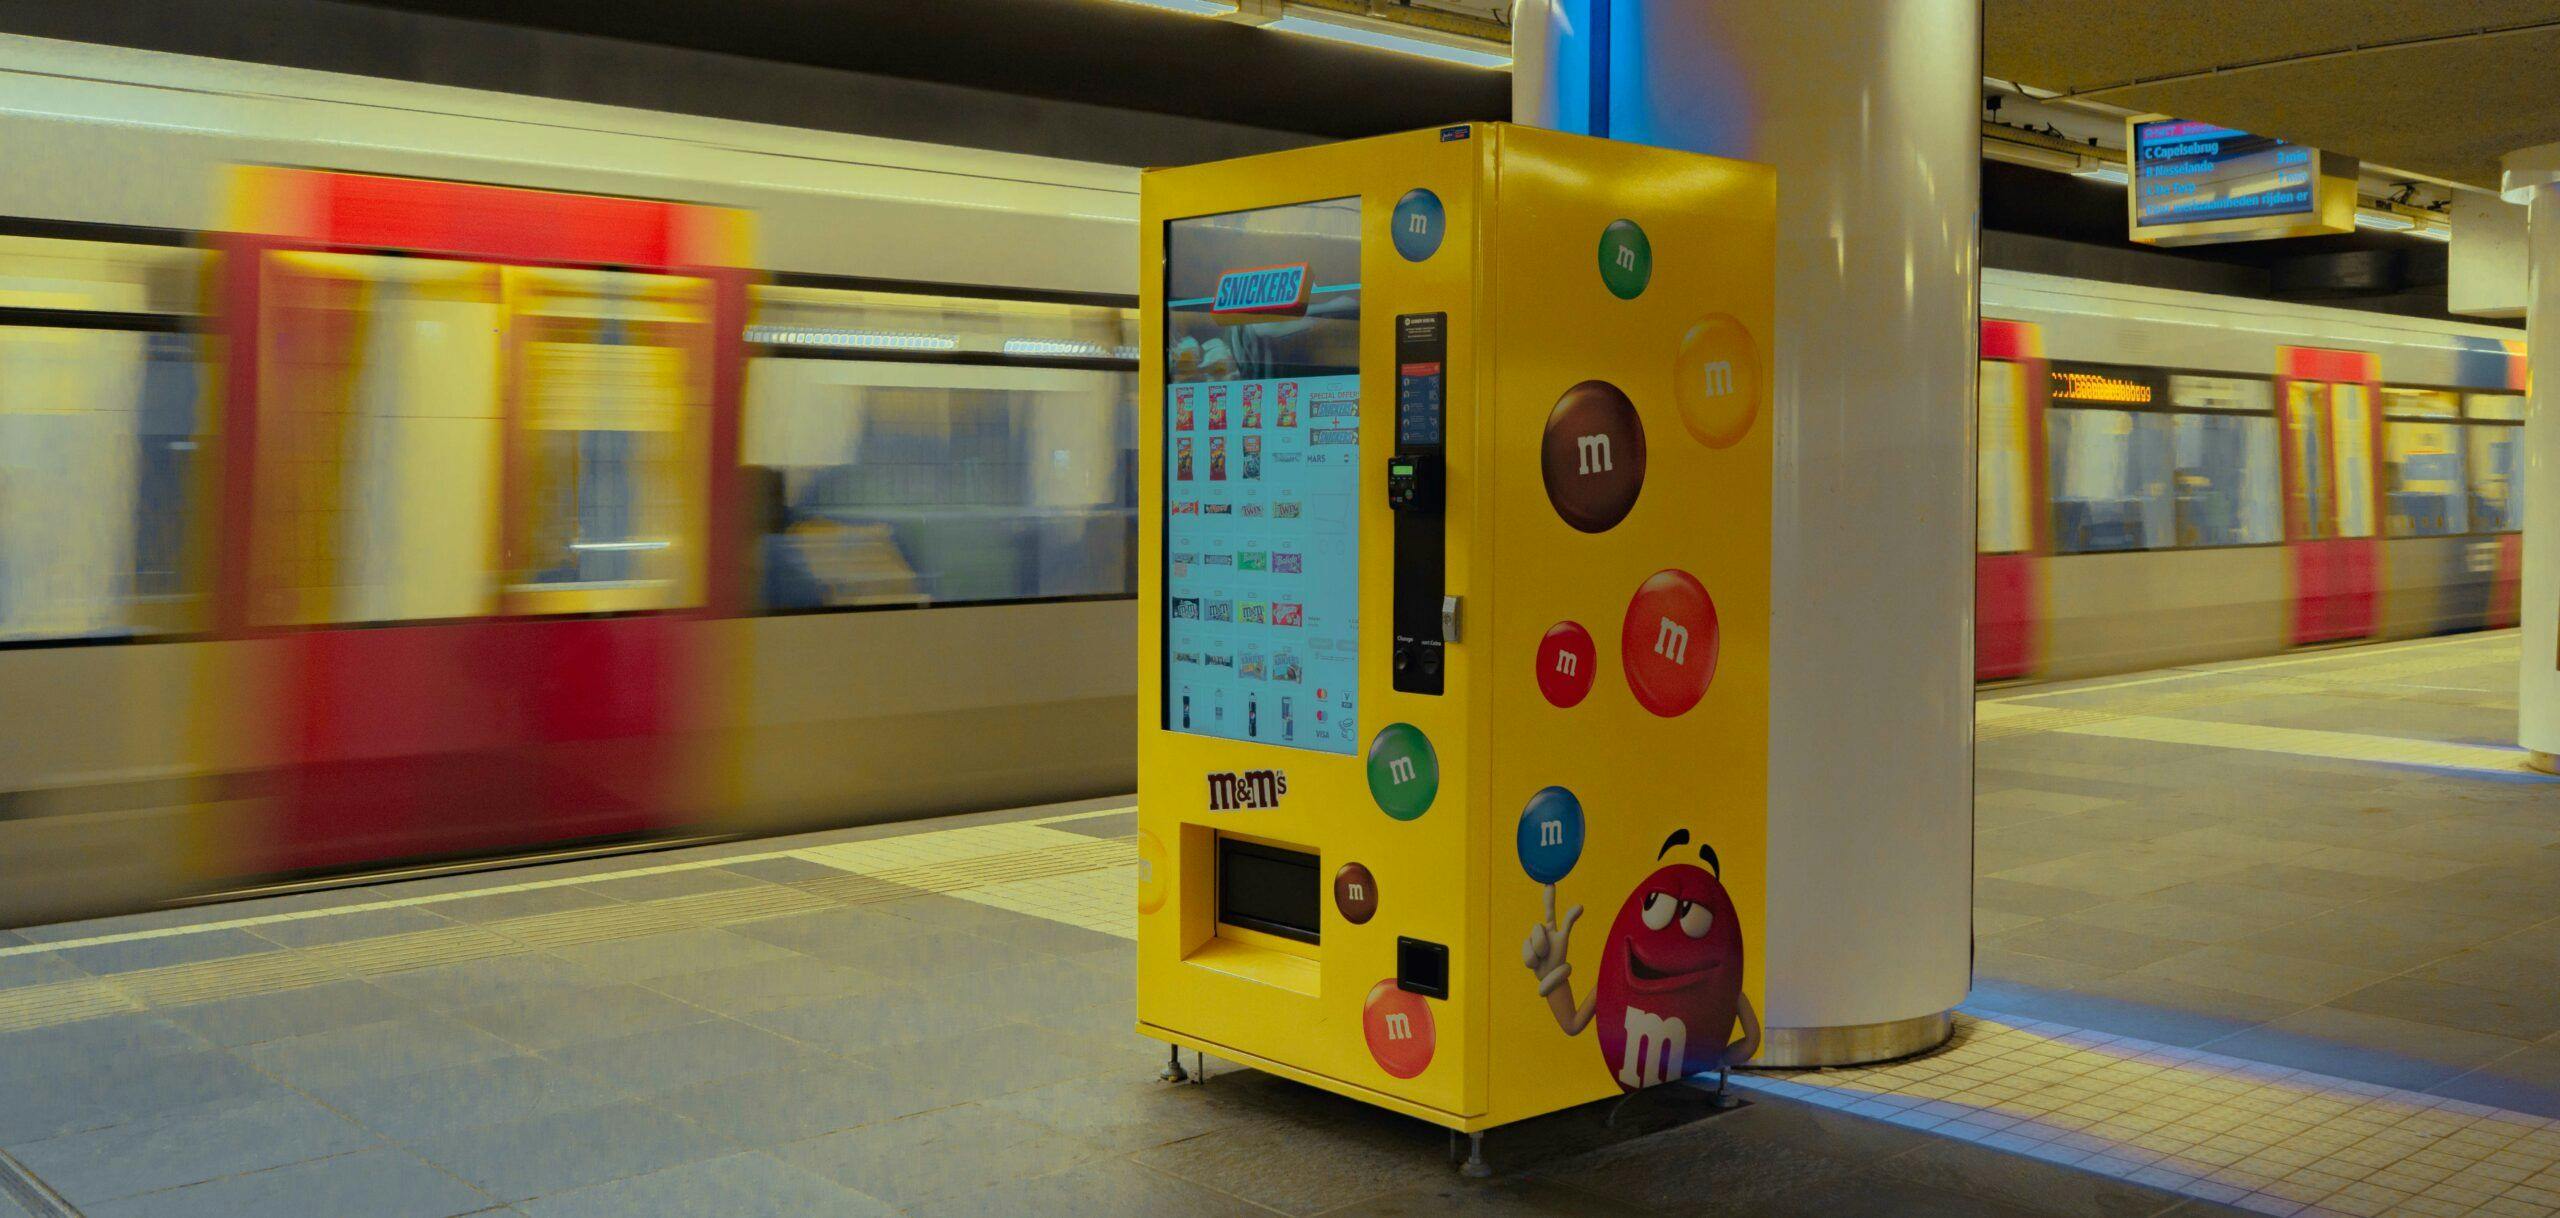 Mars branded digital vending machine